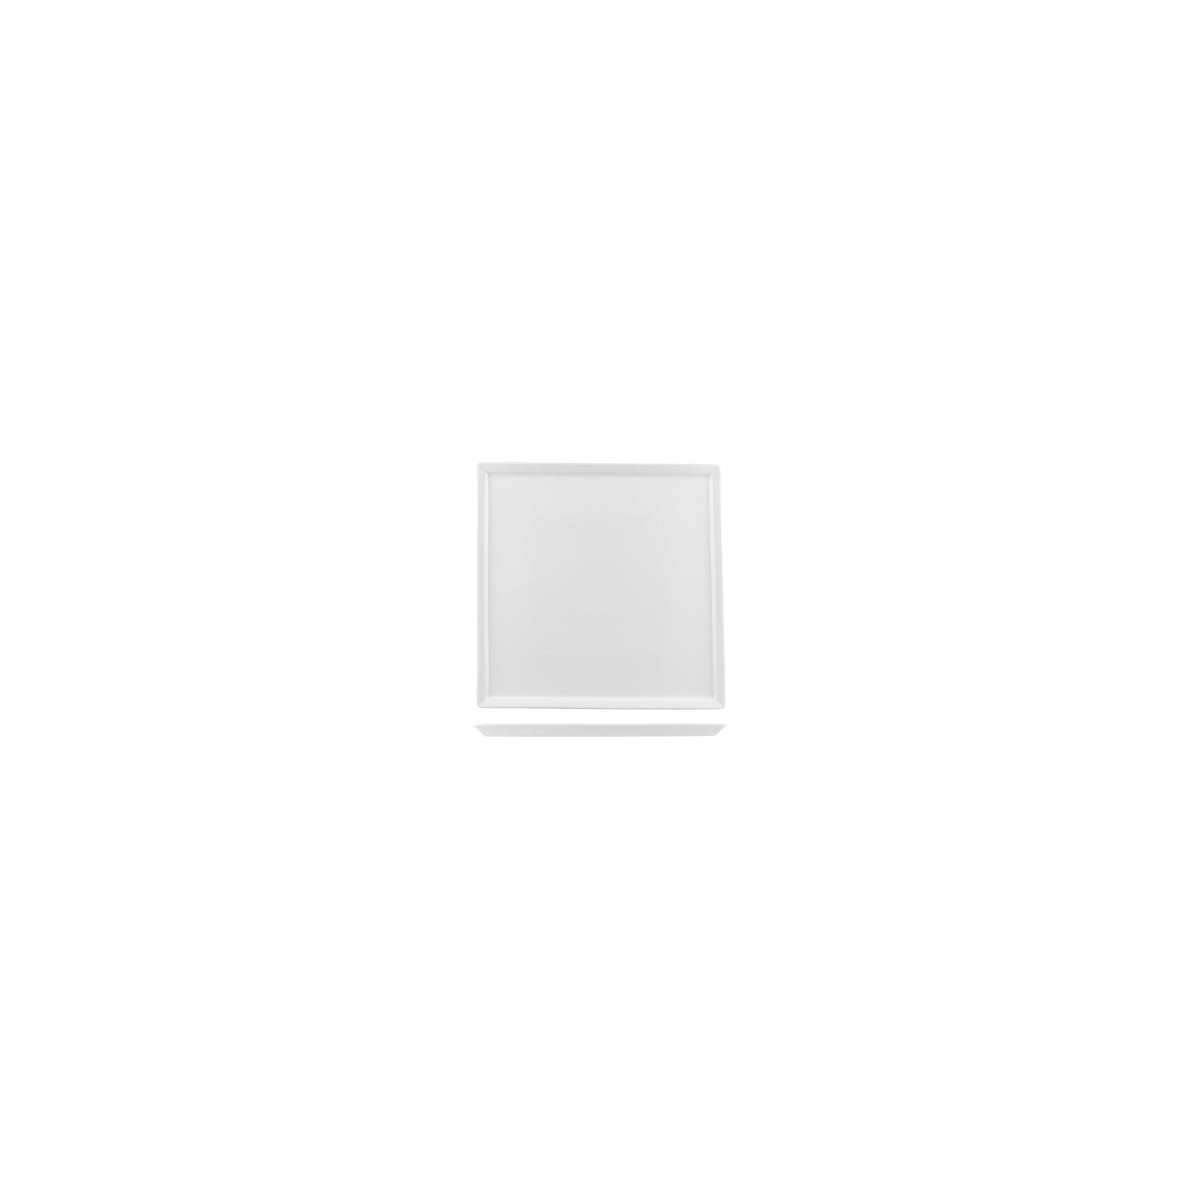 94820 Royal Porcelain White Album Square Plate 100x100mm (U3207) Tomkin Australia Hospitality Supplies